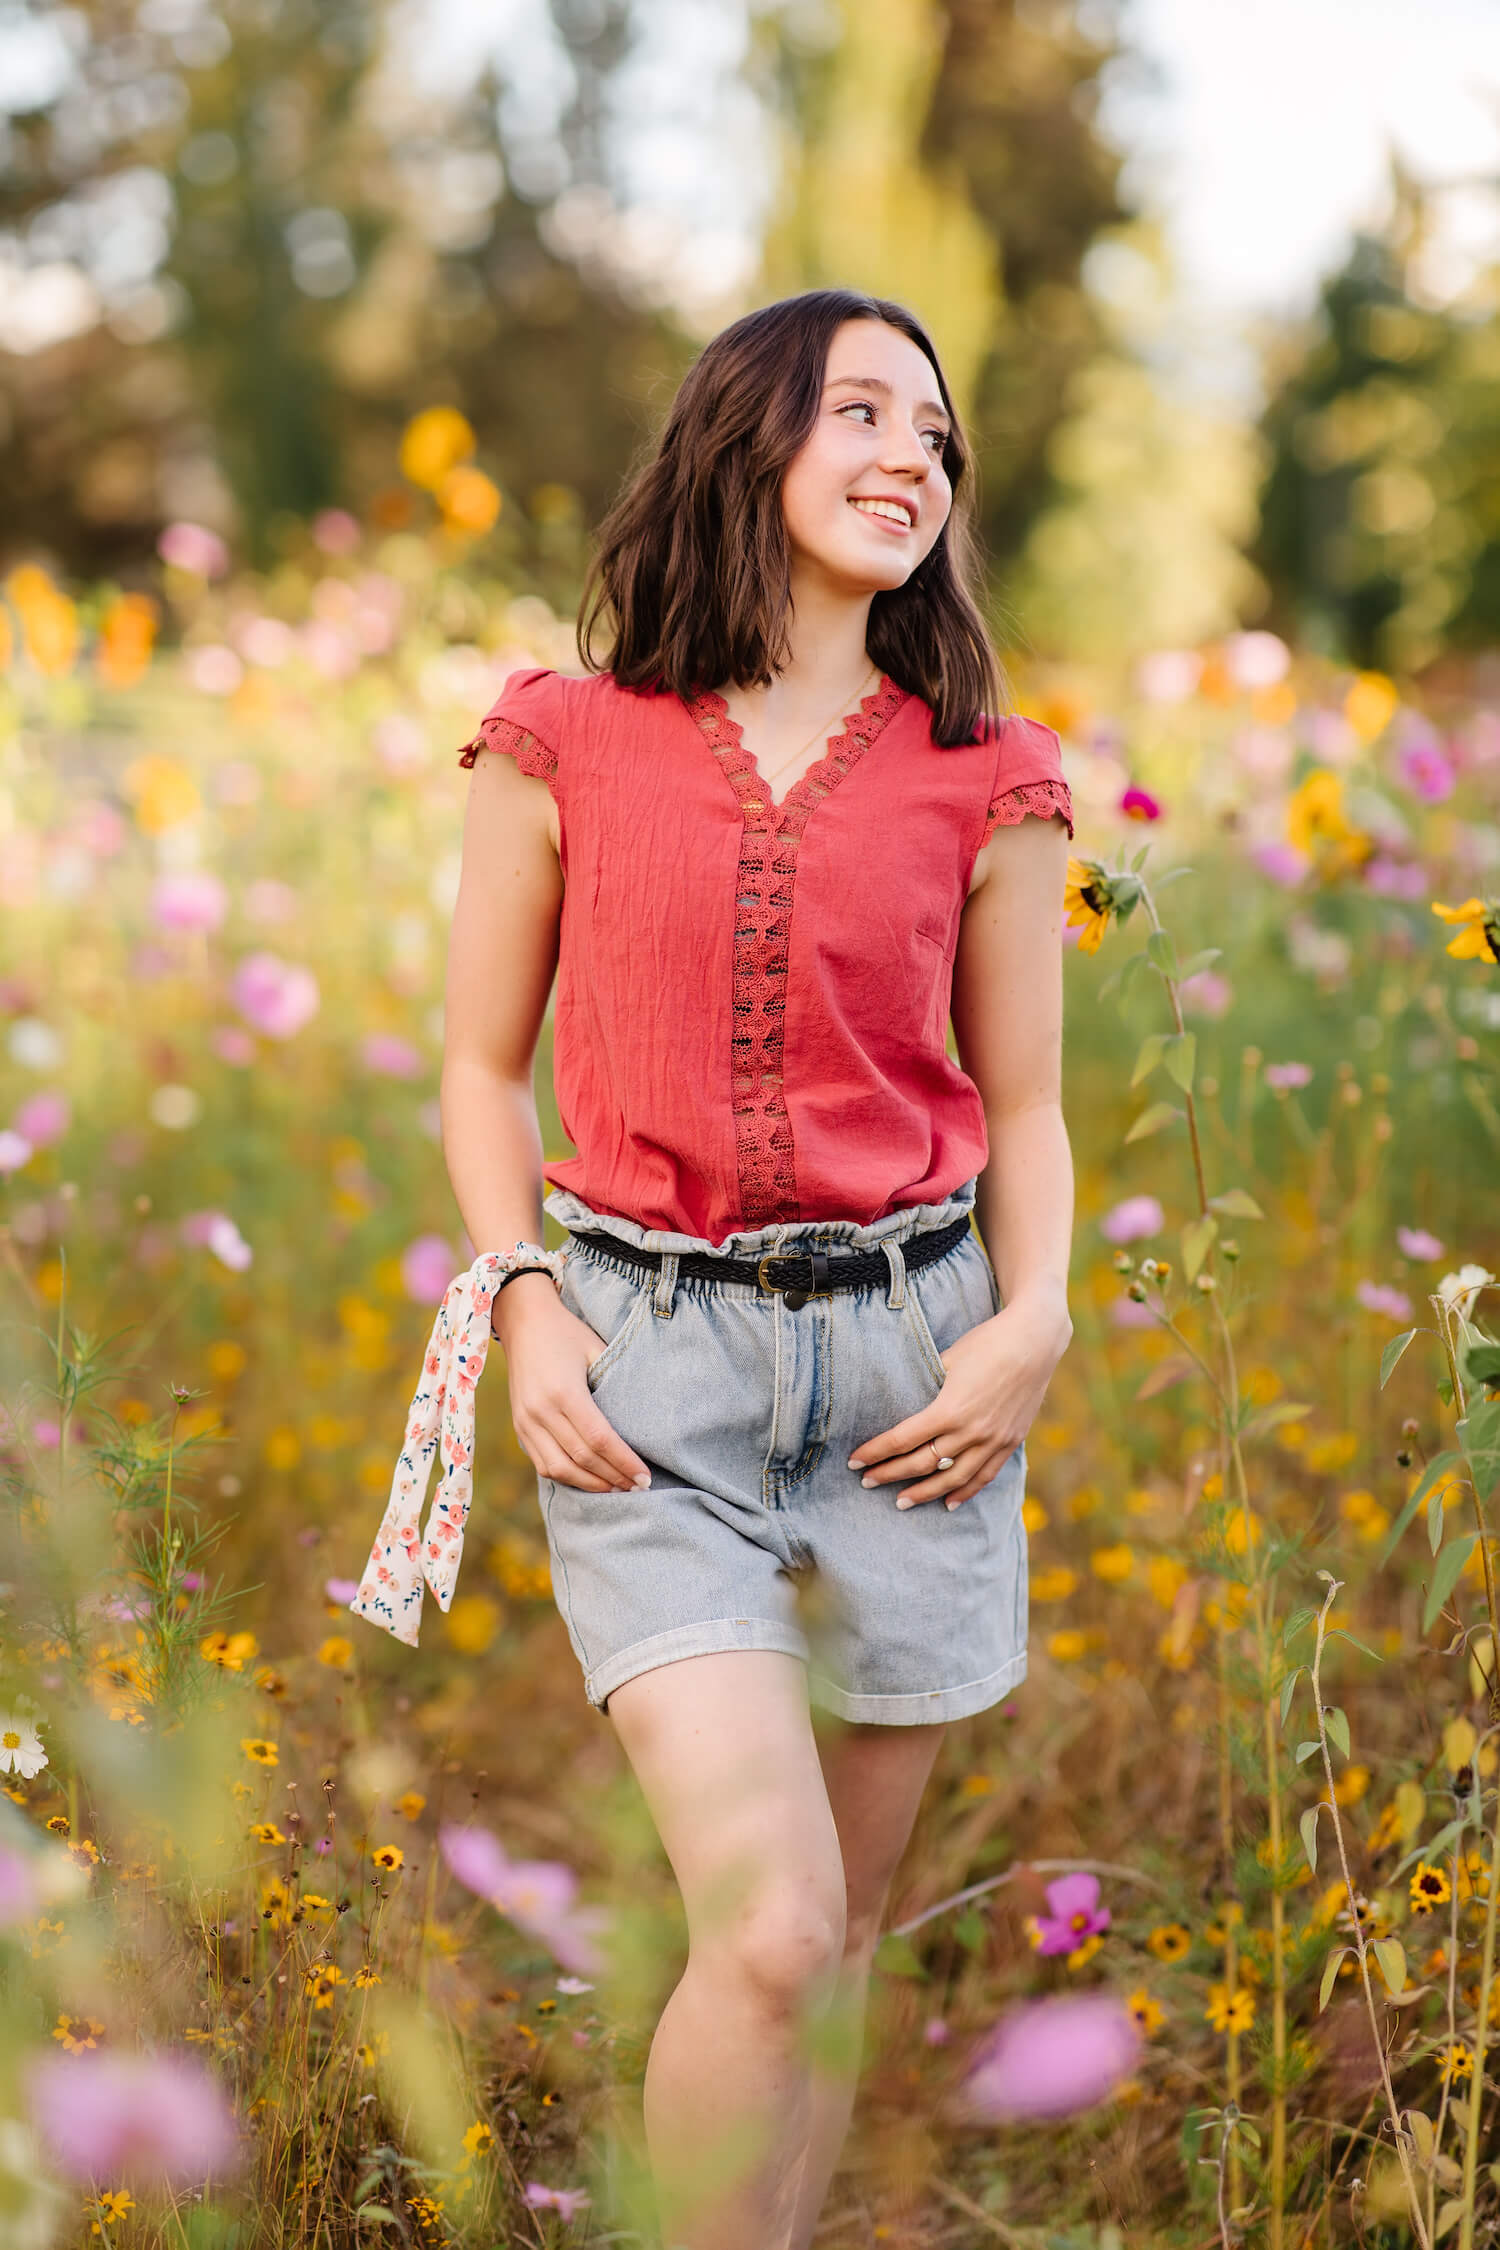 brunette in pink shirt and denim shorts standing in wild flower field